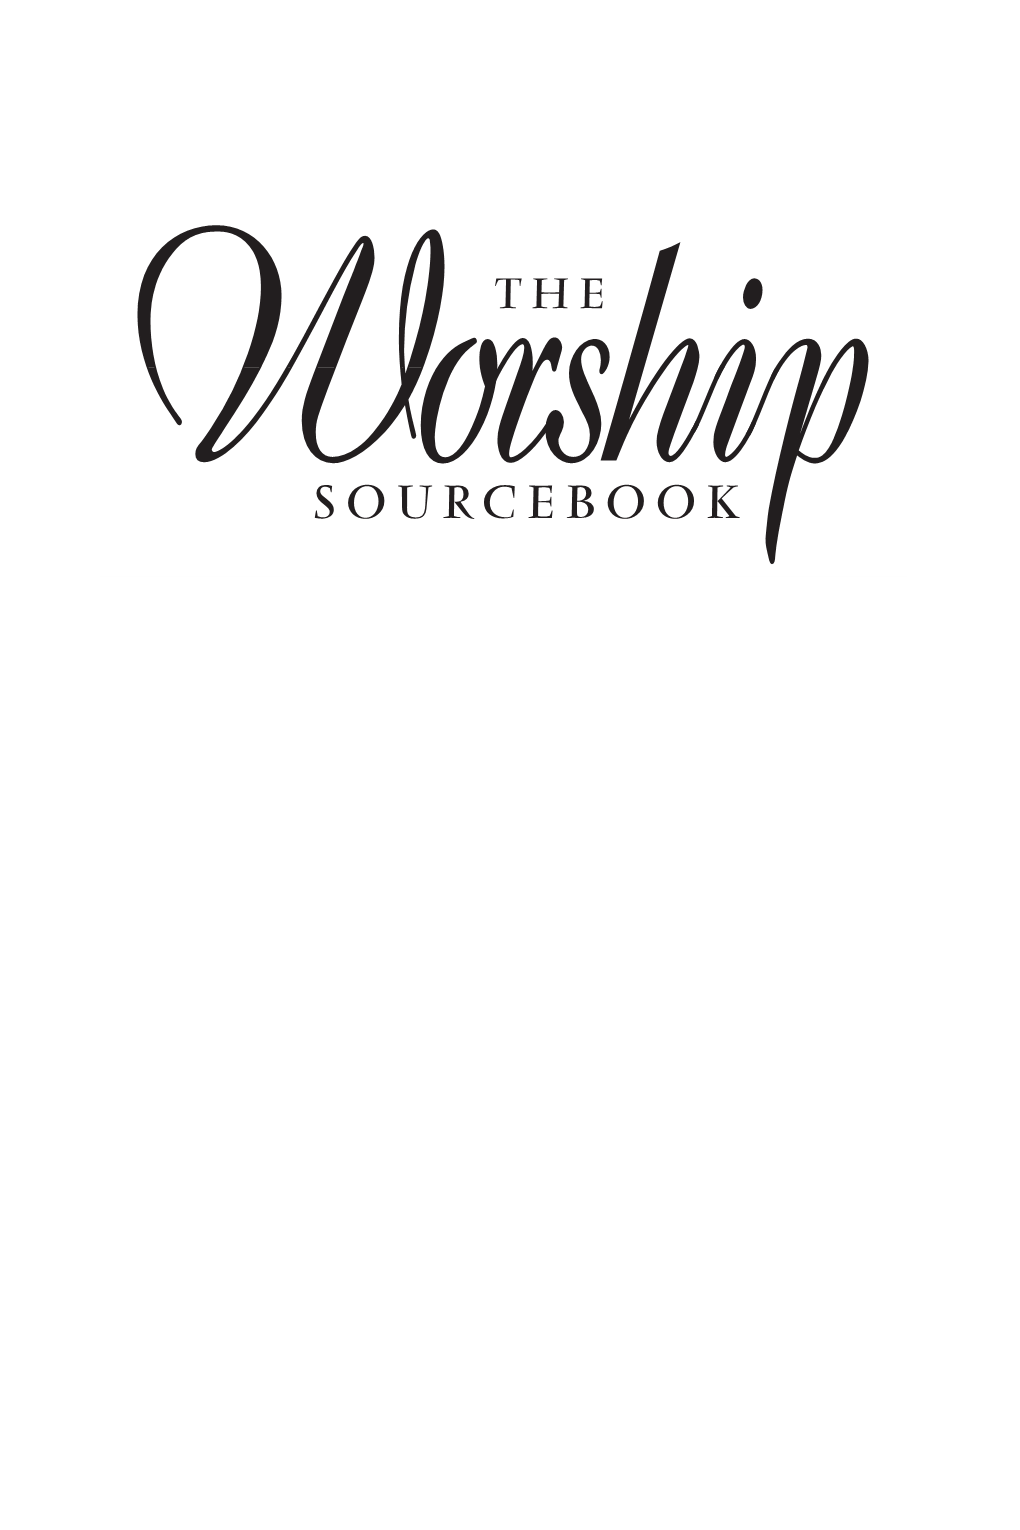 Worship Sourcebook